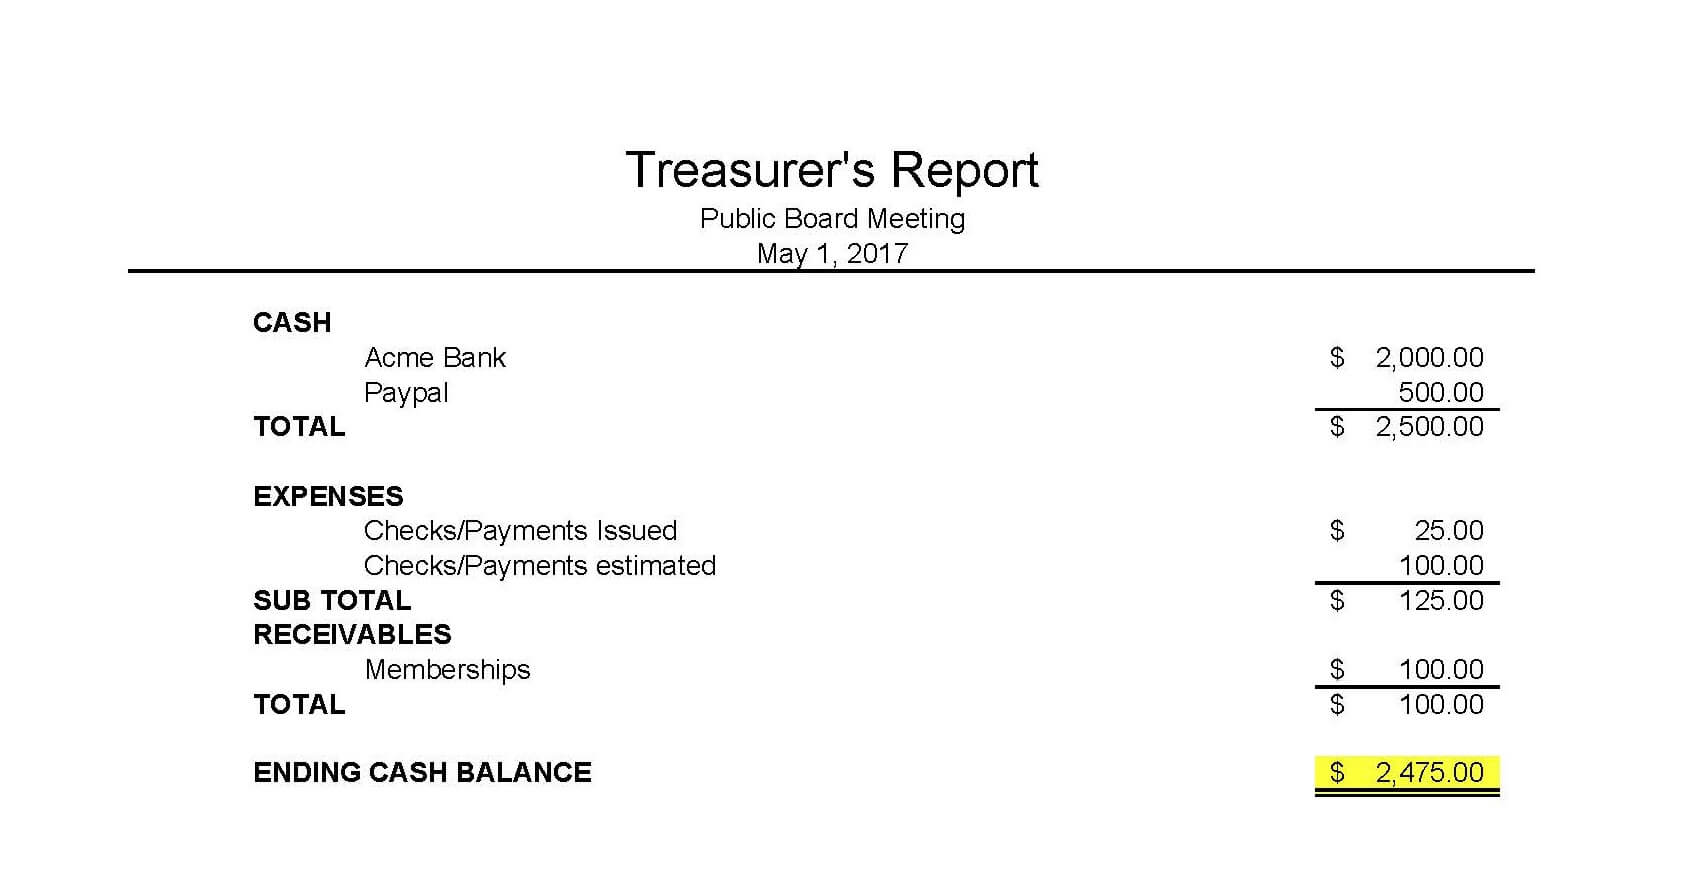 009 Treasurer Report Template Non Profit Sample Club Regarding Treasurer Report Template Non Profit